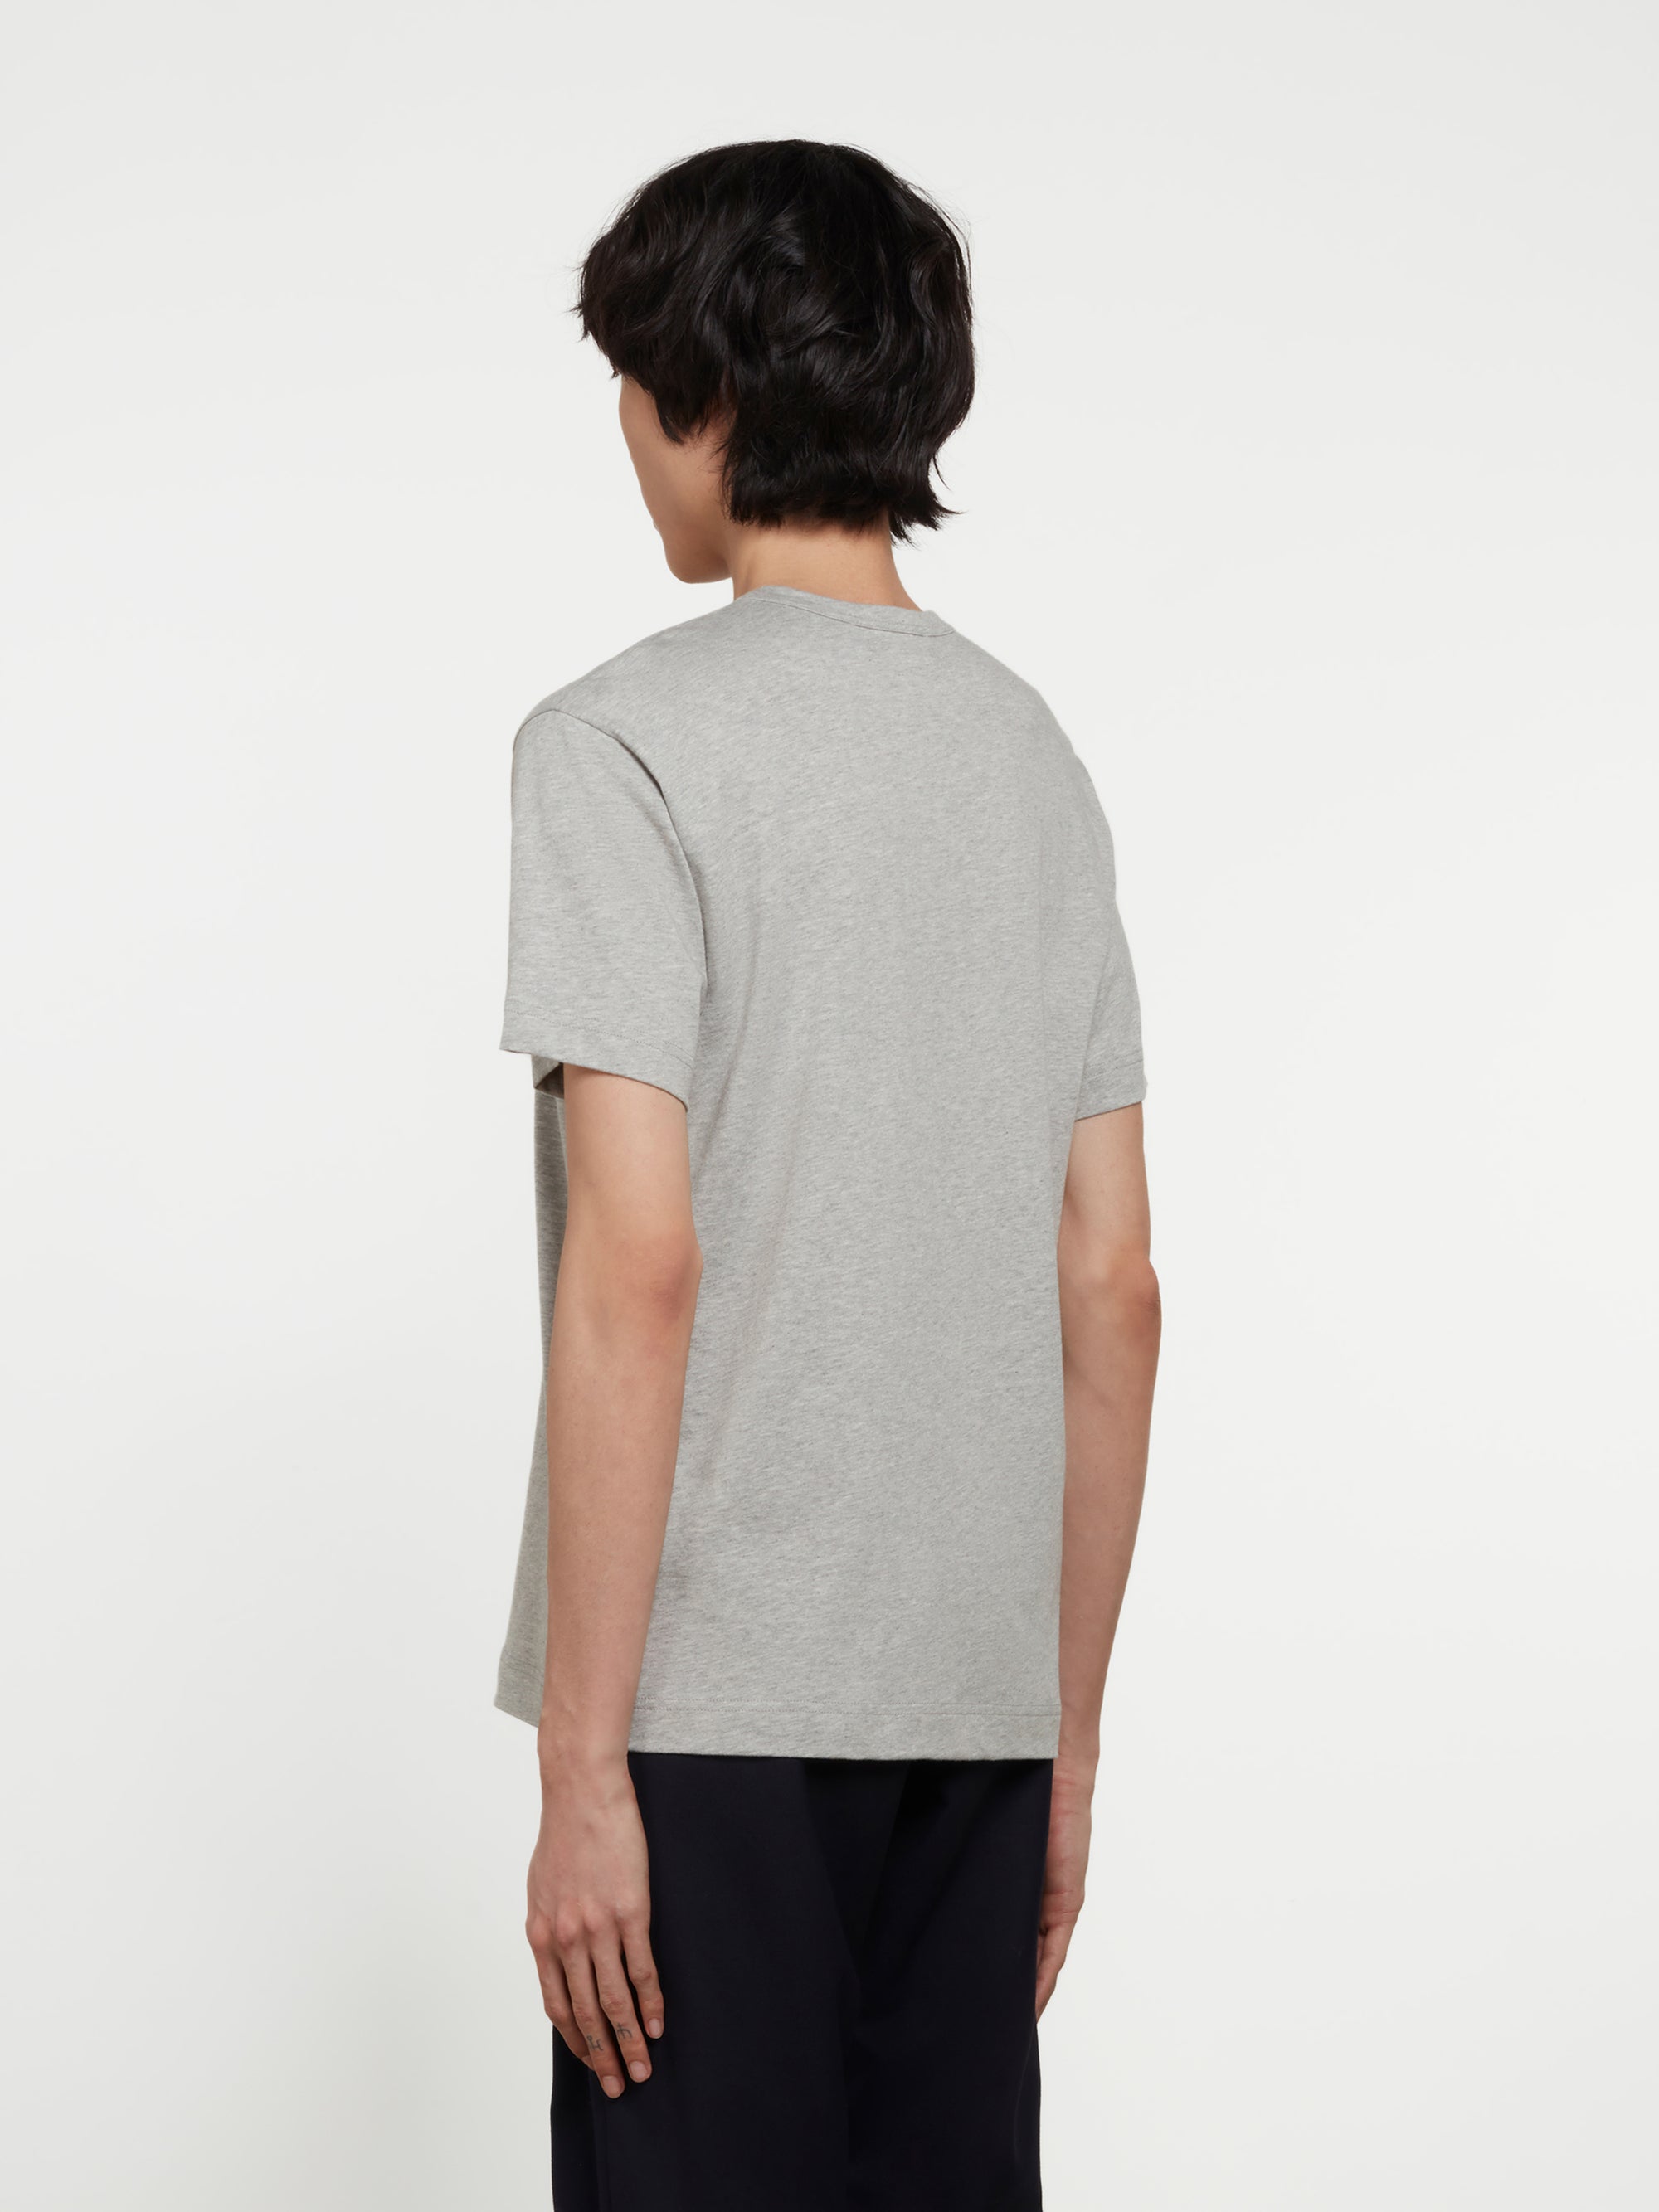 CDG Shirt - Lacoste Men’s Printed T-Shirt - (Top Grey) view 3